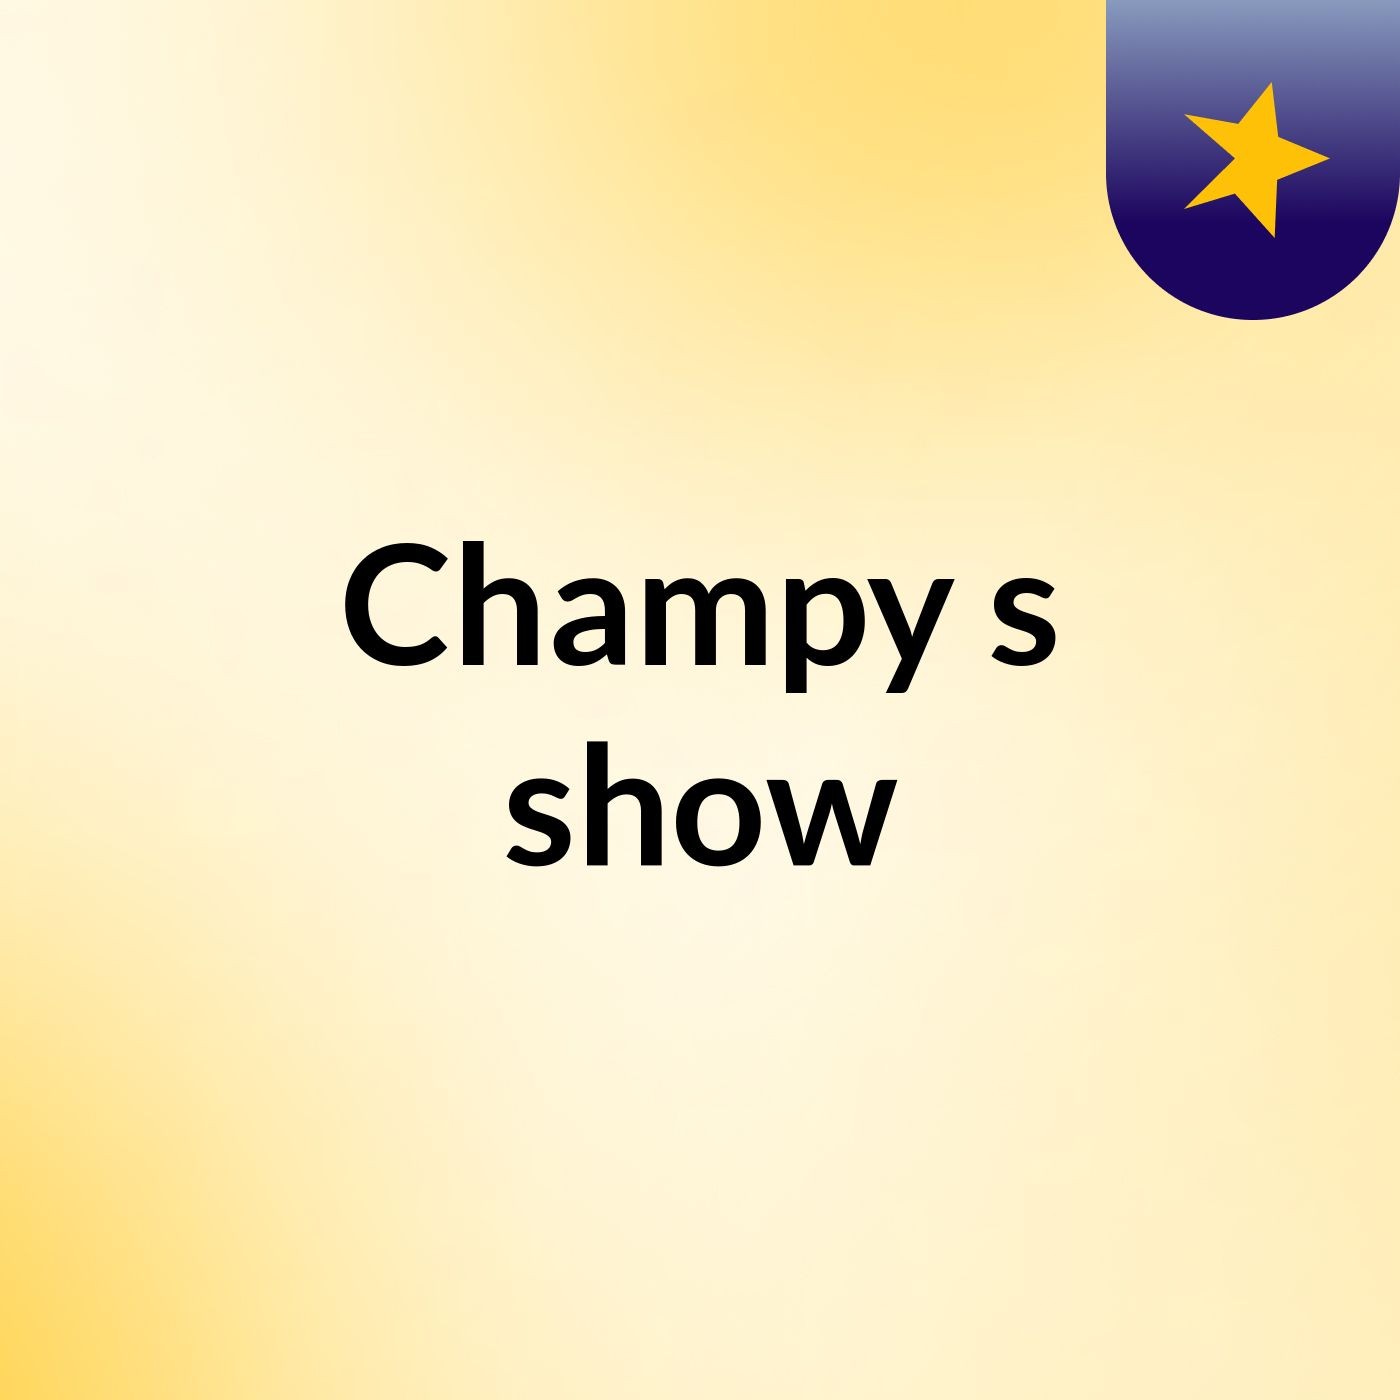 Champy's show